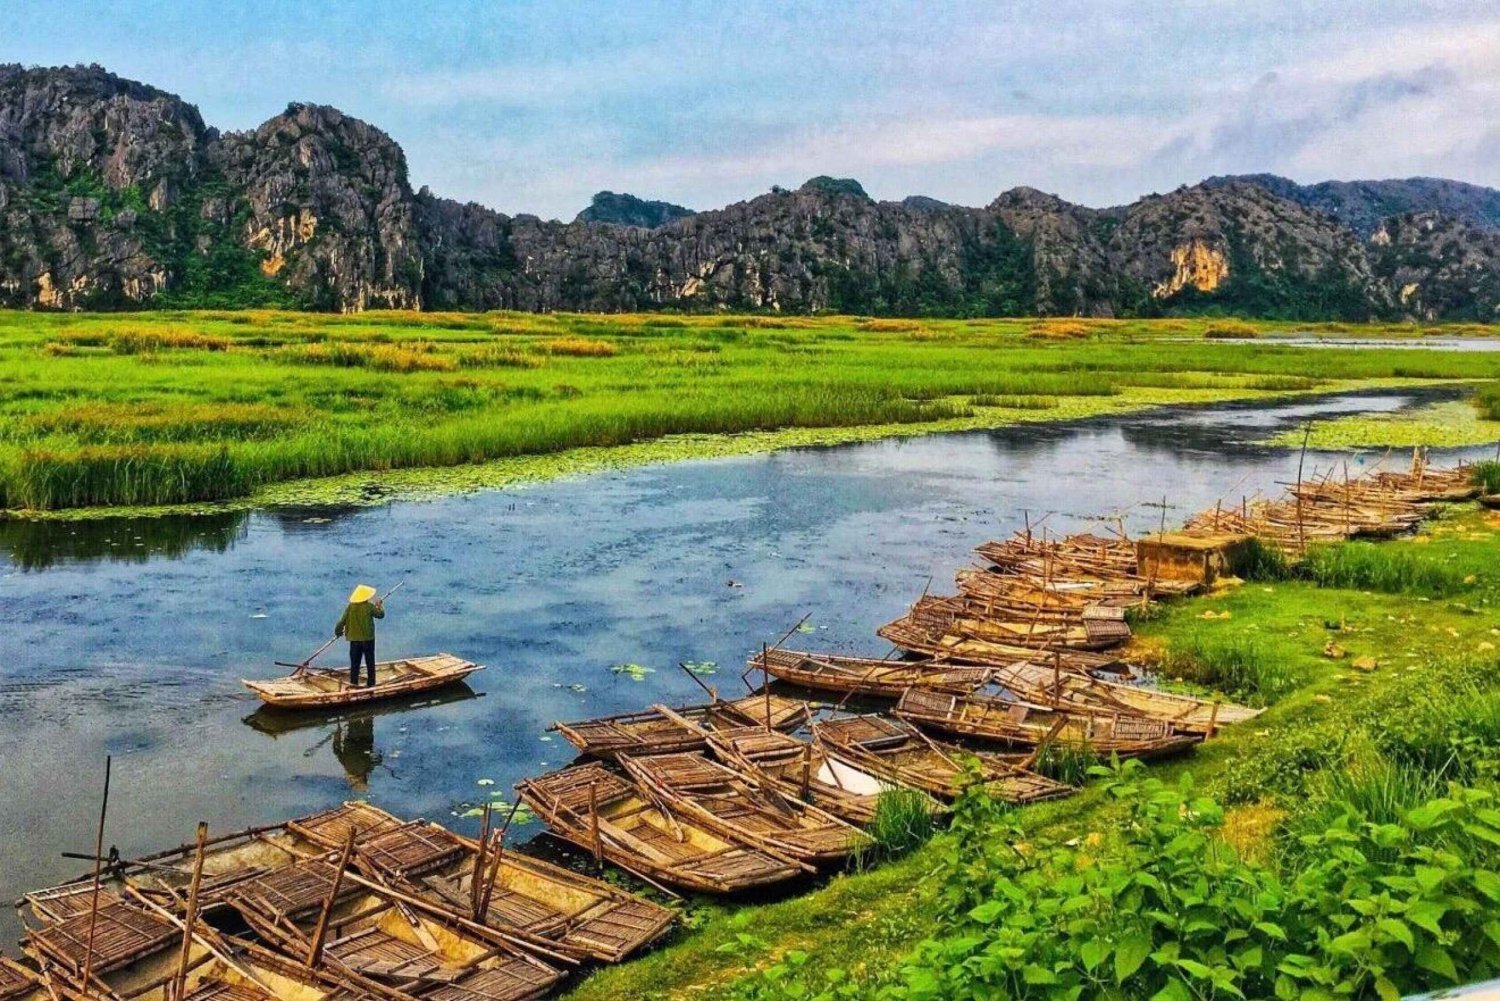 From Ninh Binh: Visit Cuc Phuong National Park - Van Long